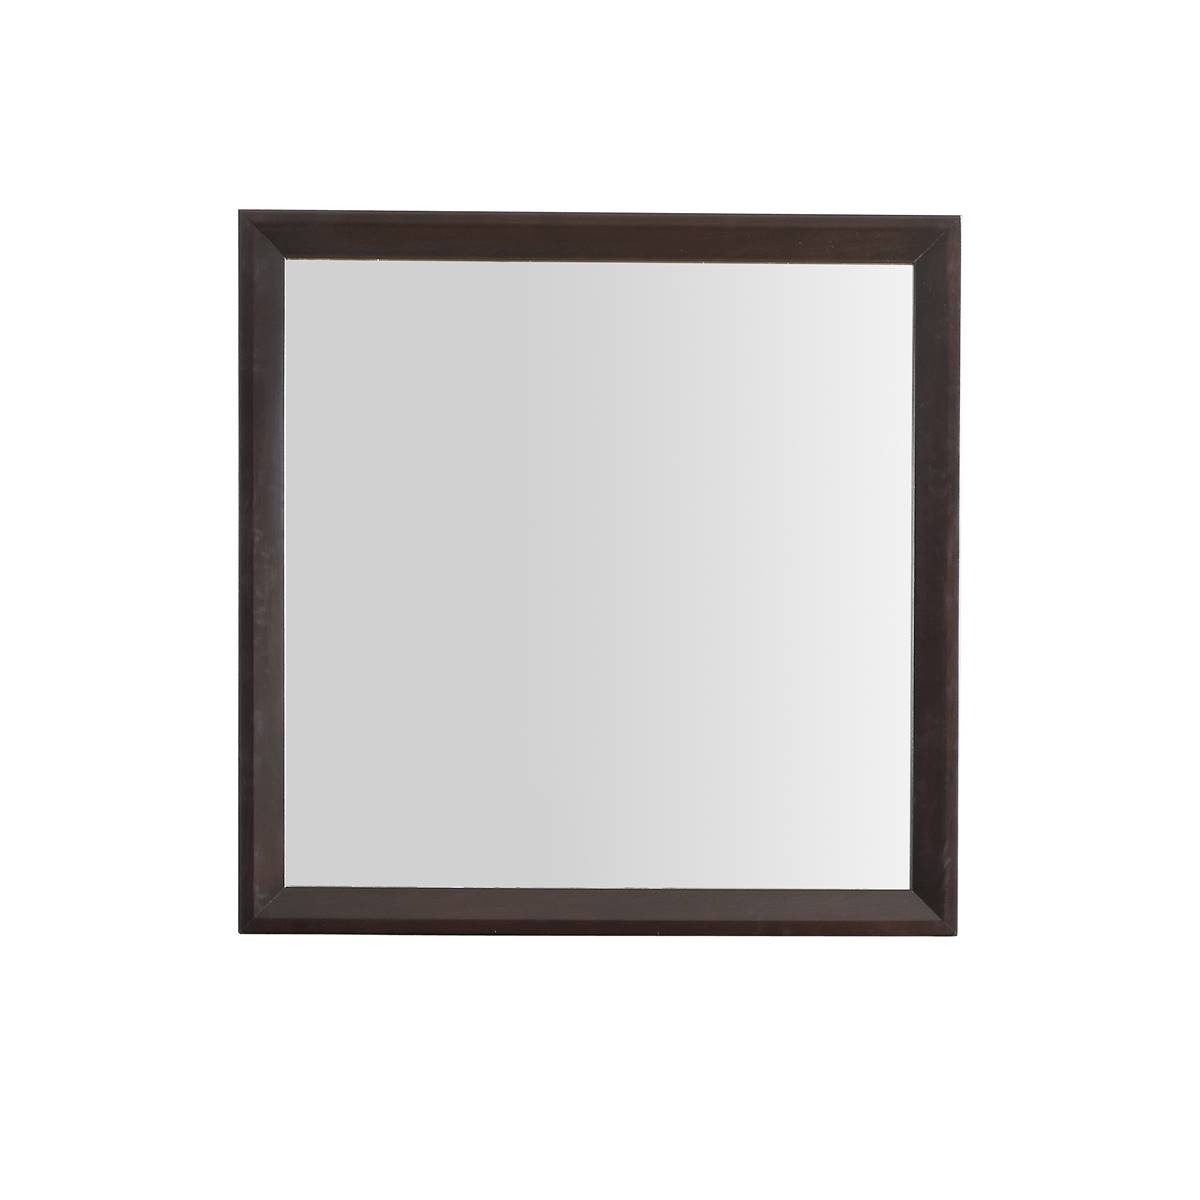 Passion Furniture Classic Square Framed Dresser Mirror - 36x36